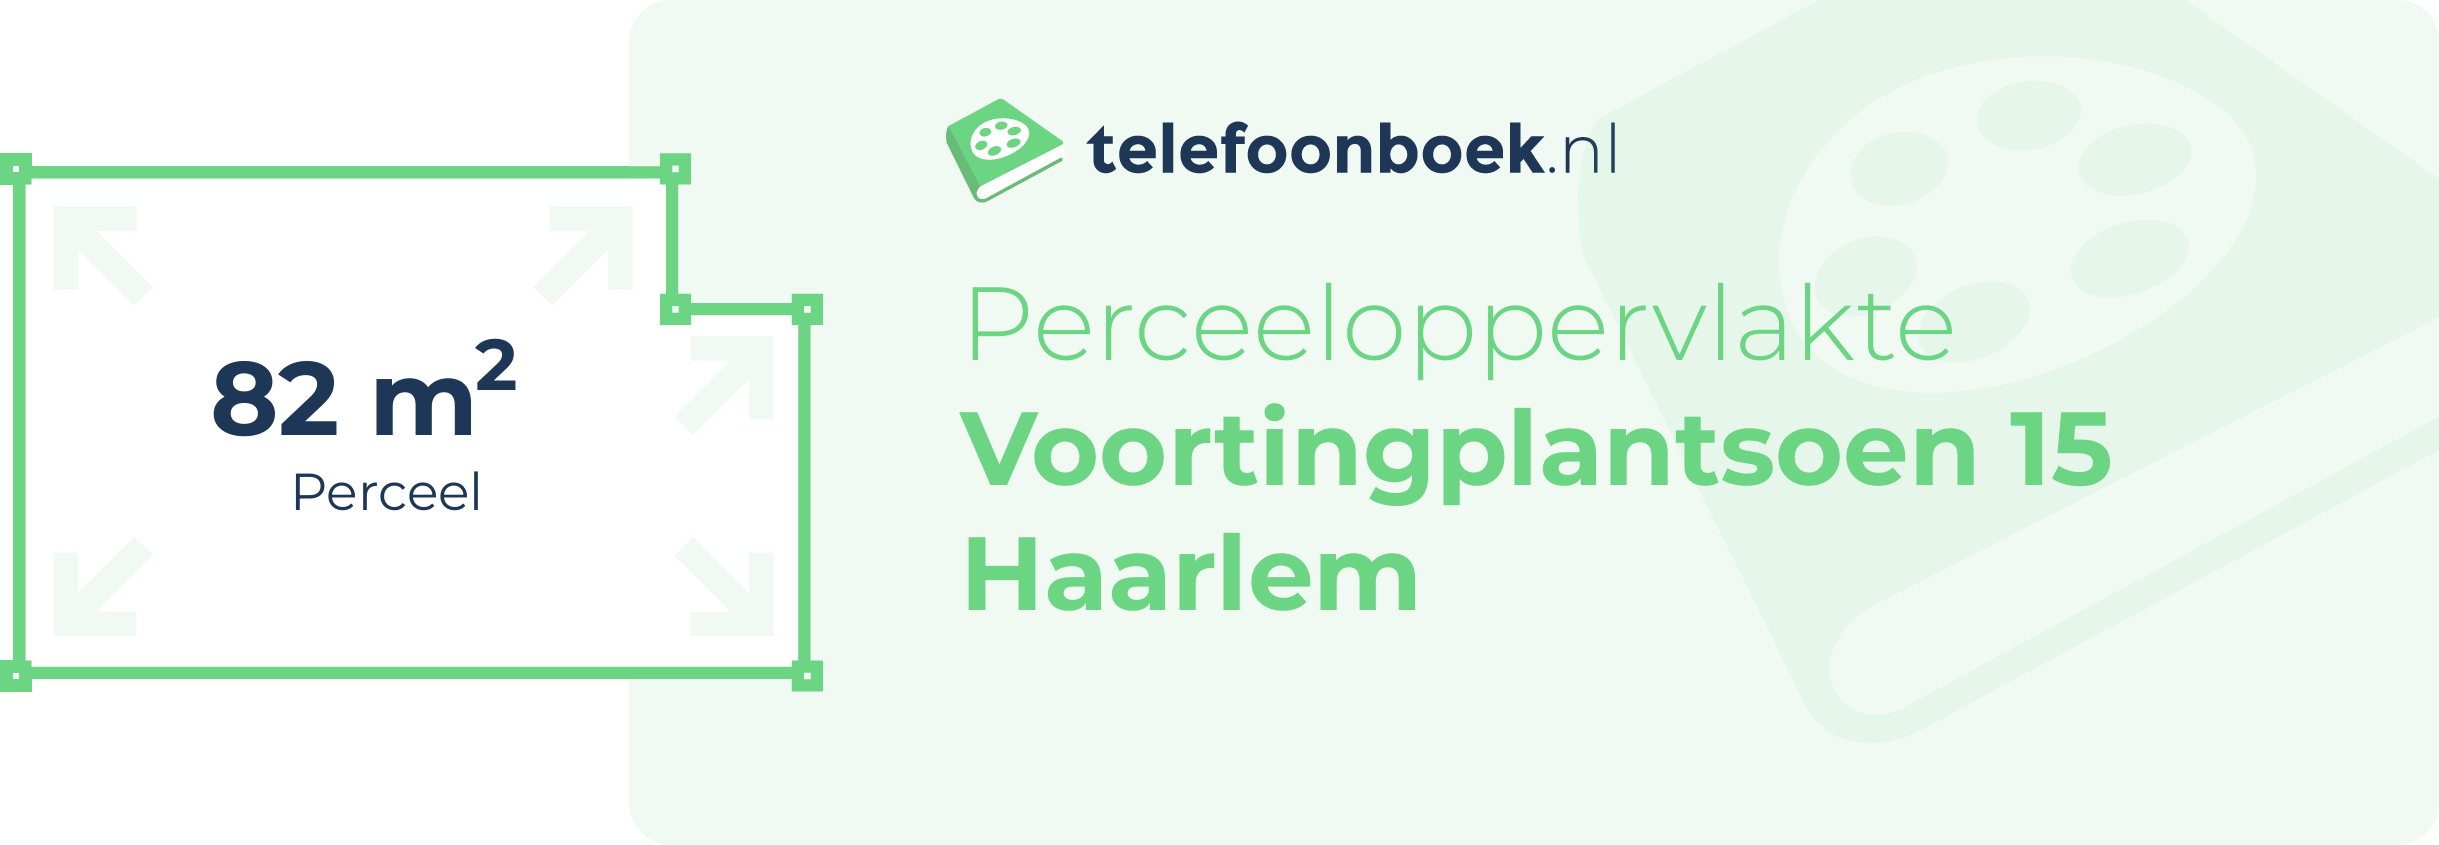 Perceeloppervlakte Voortingplantsoen 15 Haarlem